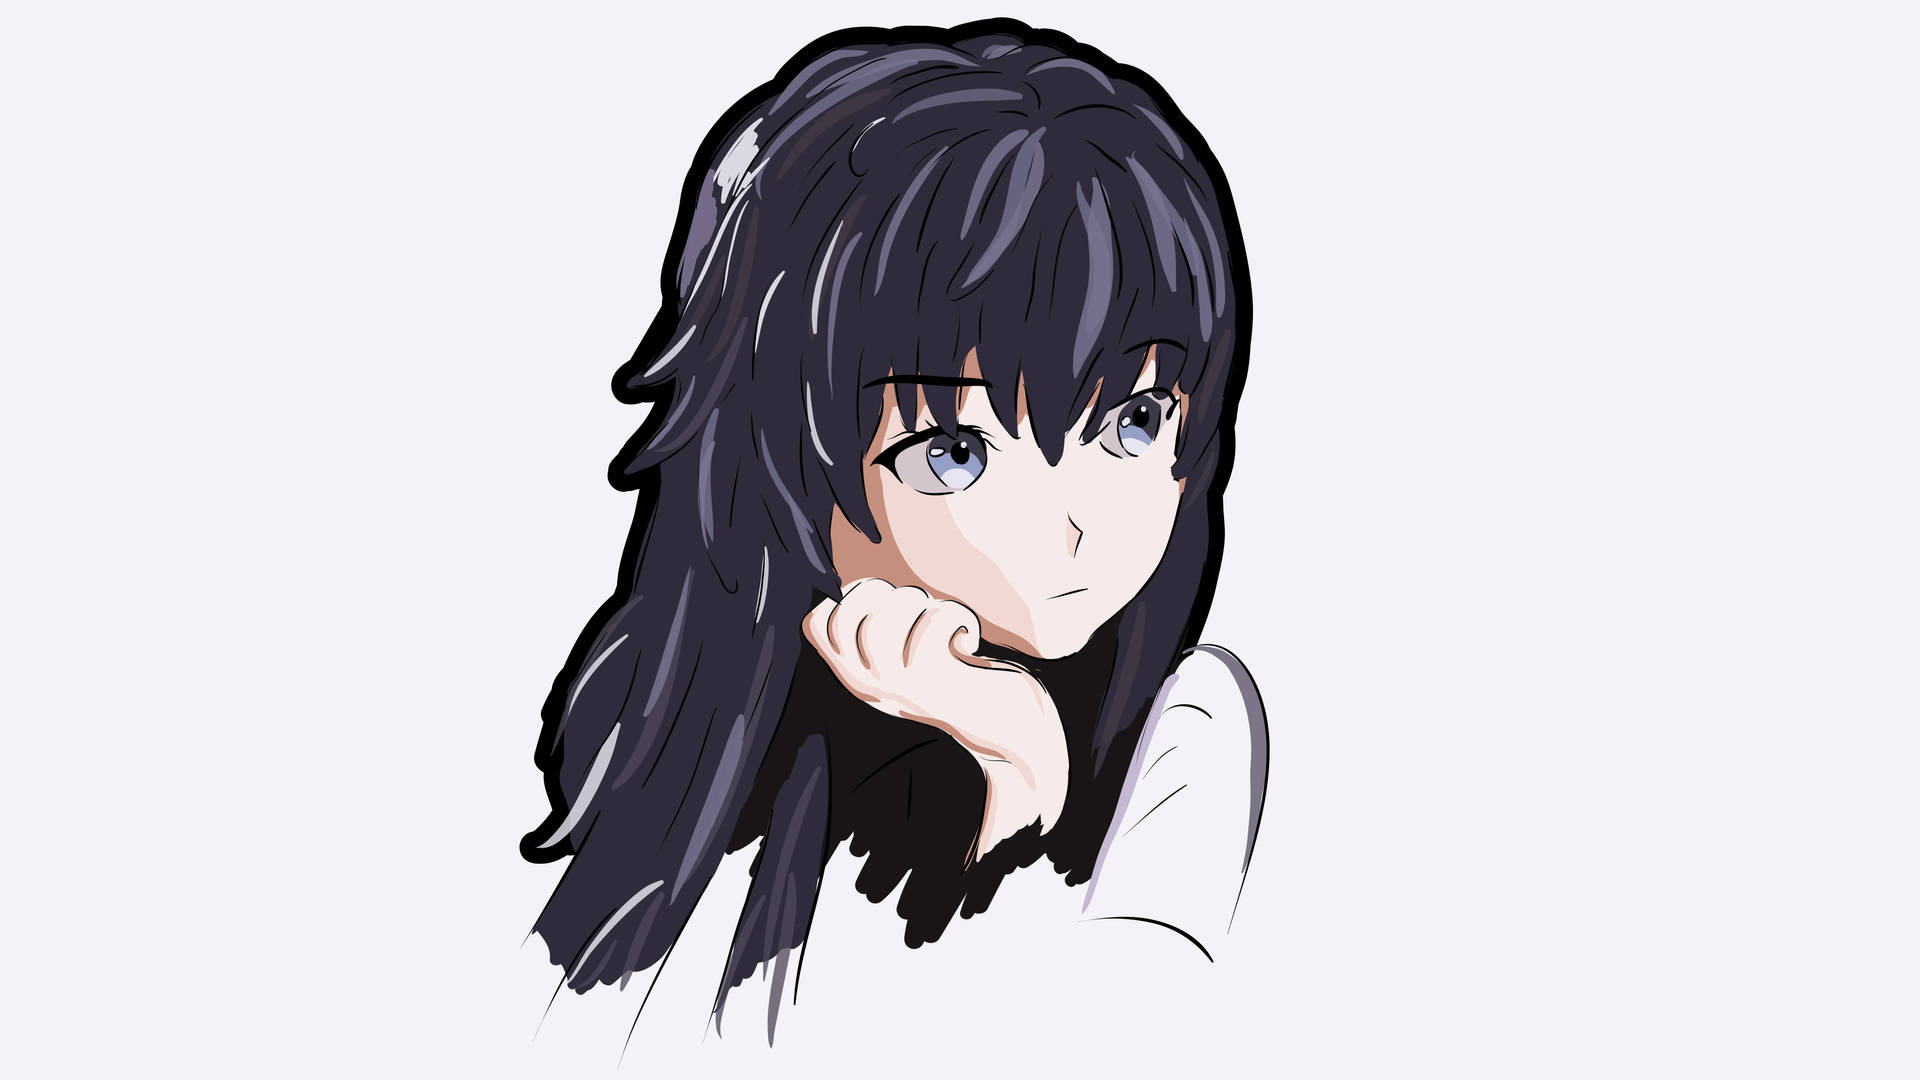 Top 999+ Sad Anime Girl Wallpaper Full HD, 4K✅Free to Use